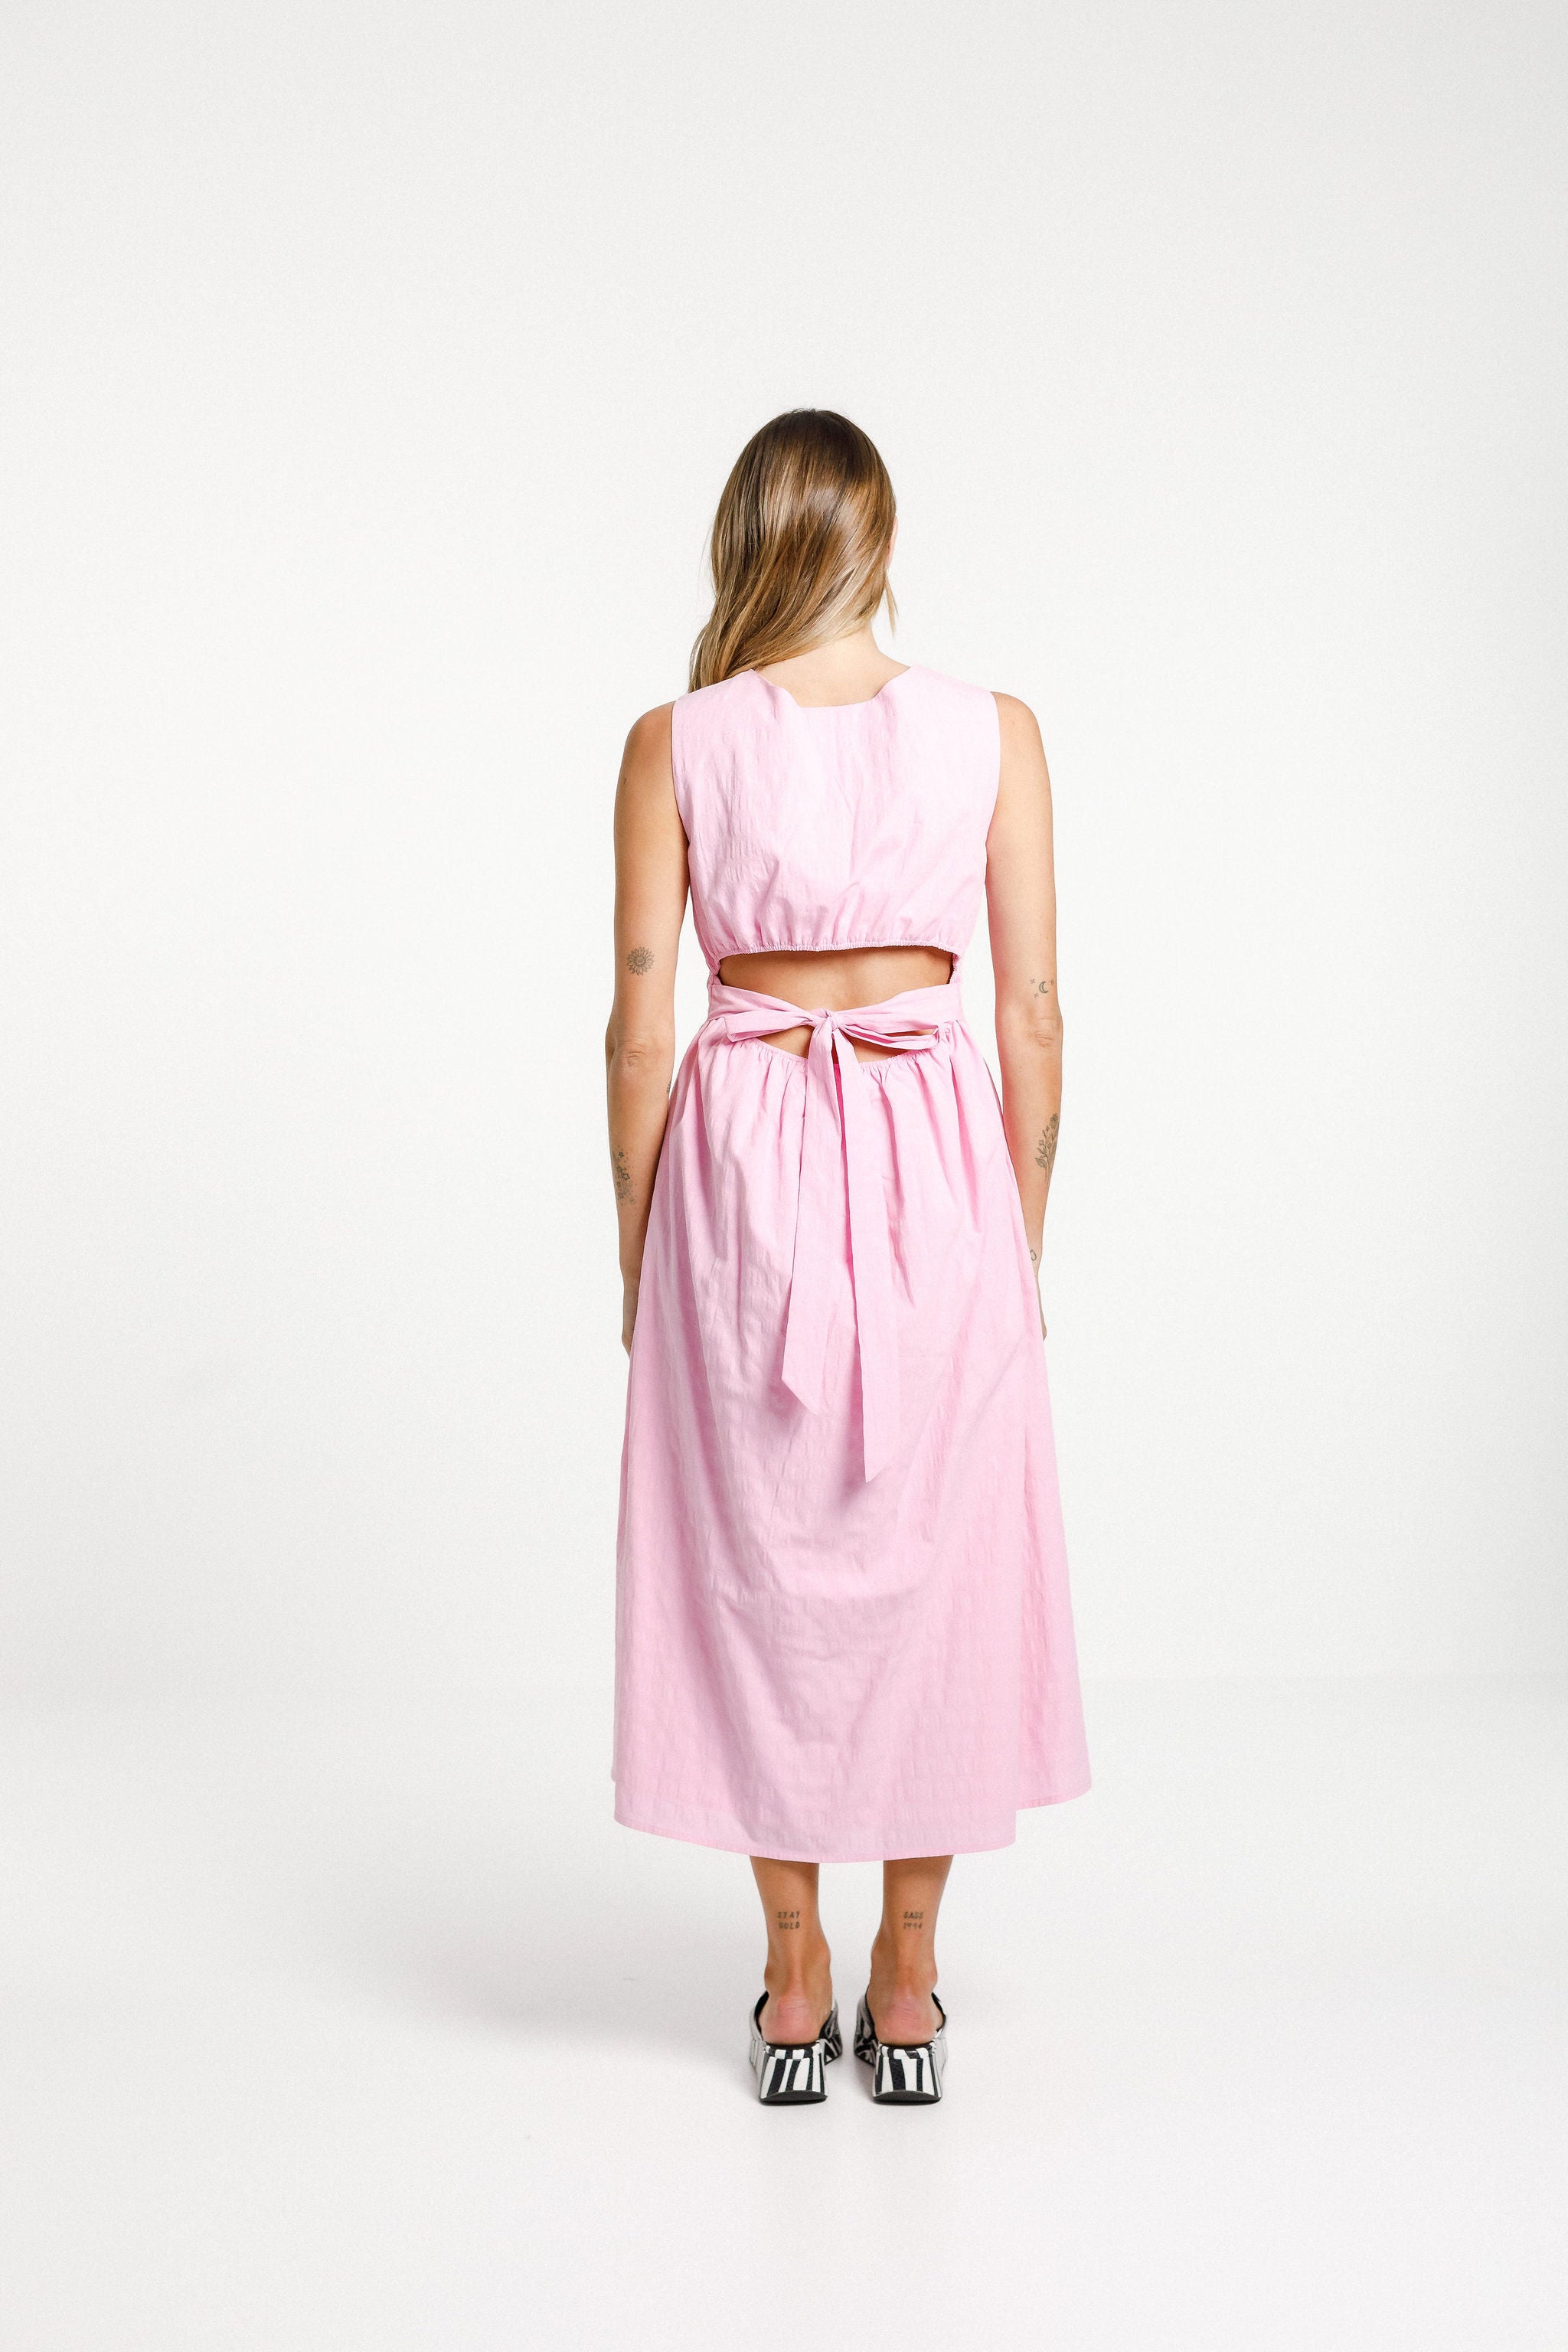 Pippa Dress - Sale - Candy